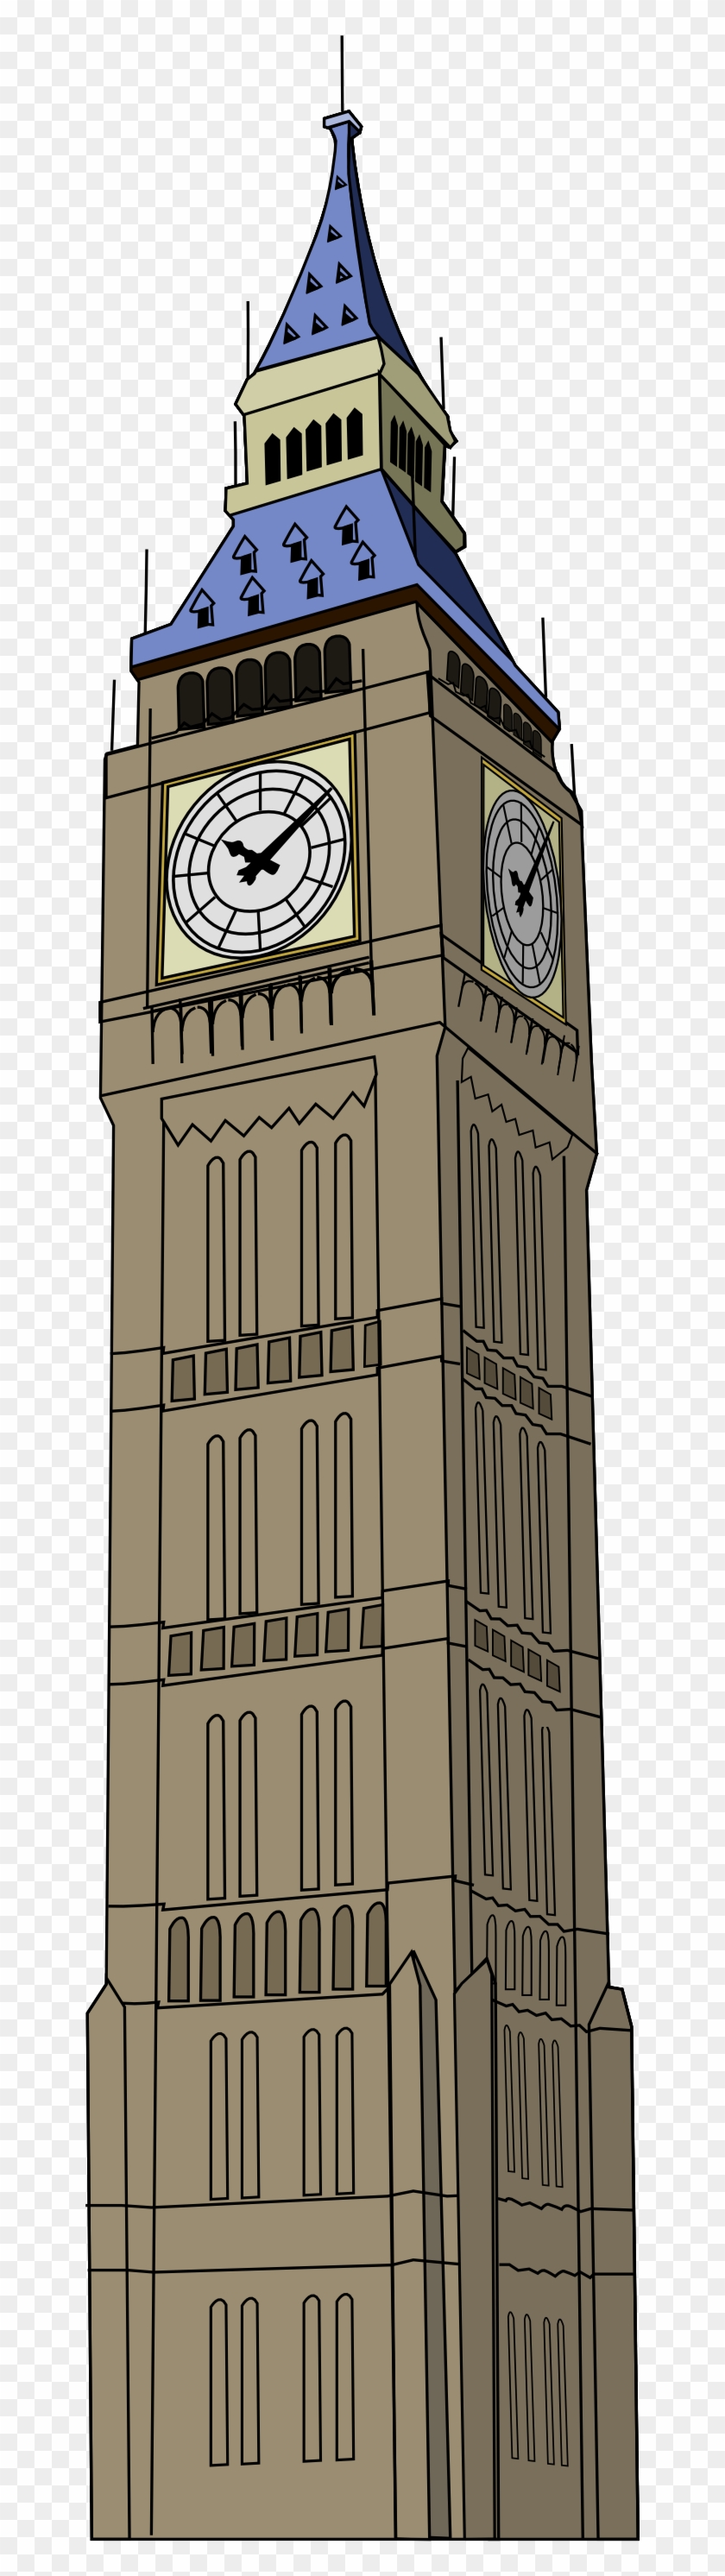 Cartoon Sketch Of Big Ben Clock Tower In London England United Kingdom  Stock Illustration - Download Image Now - iStock